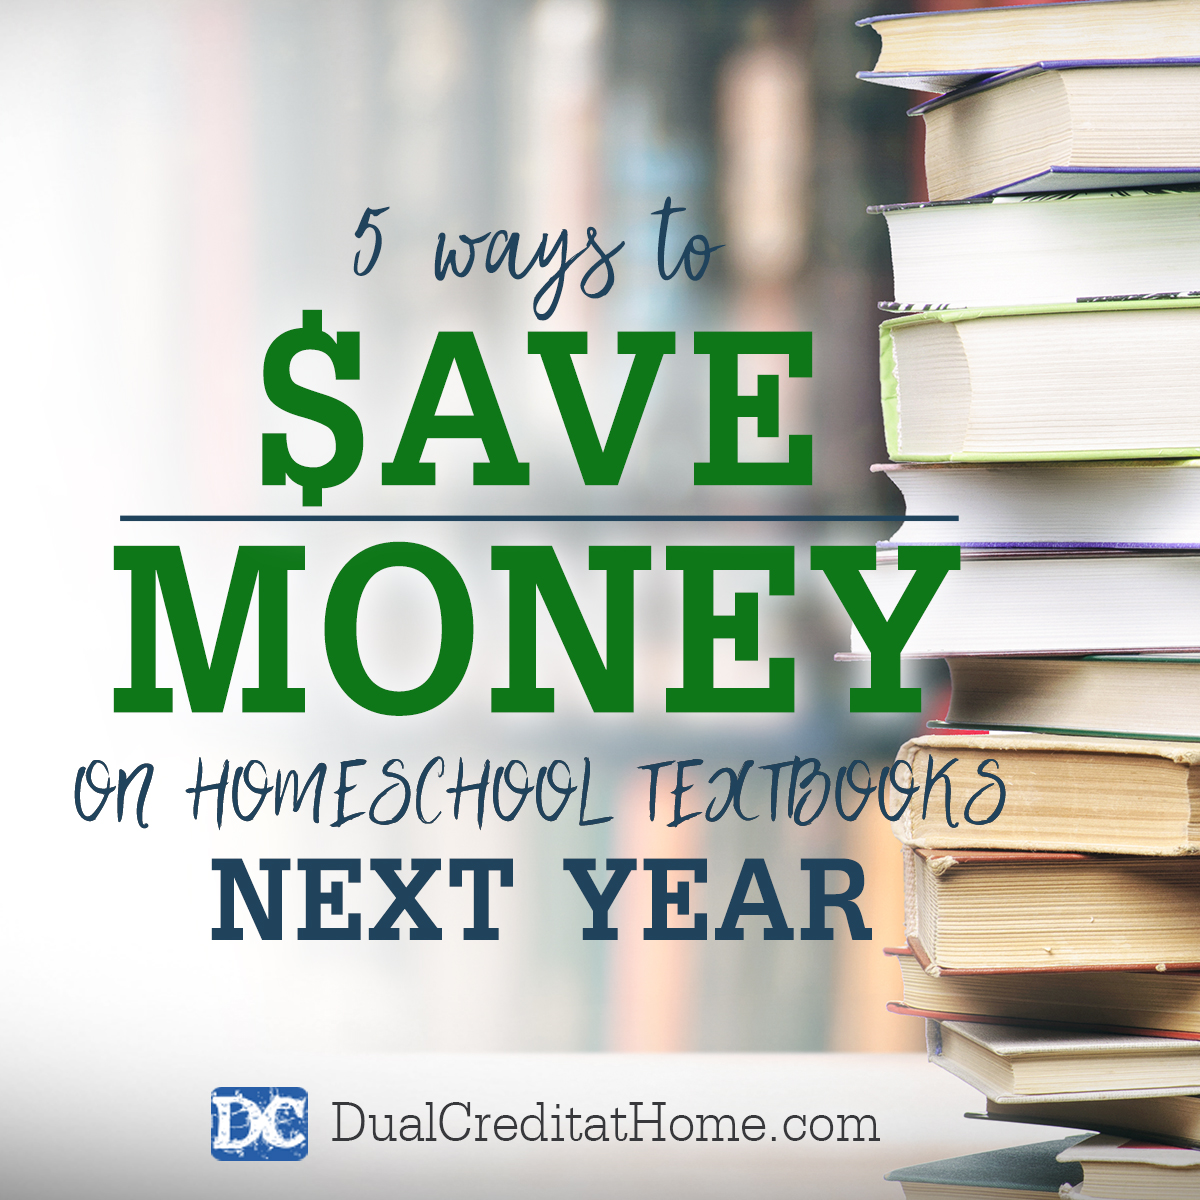 5 Ways to Save Money on Homeschool Textbooks Next Year